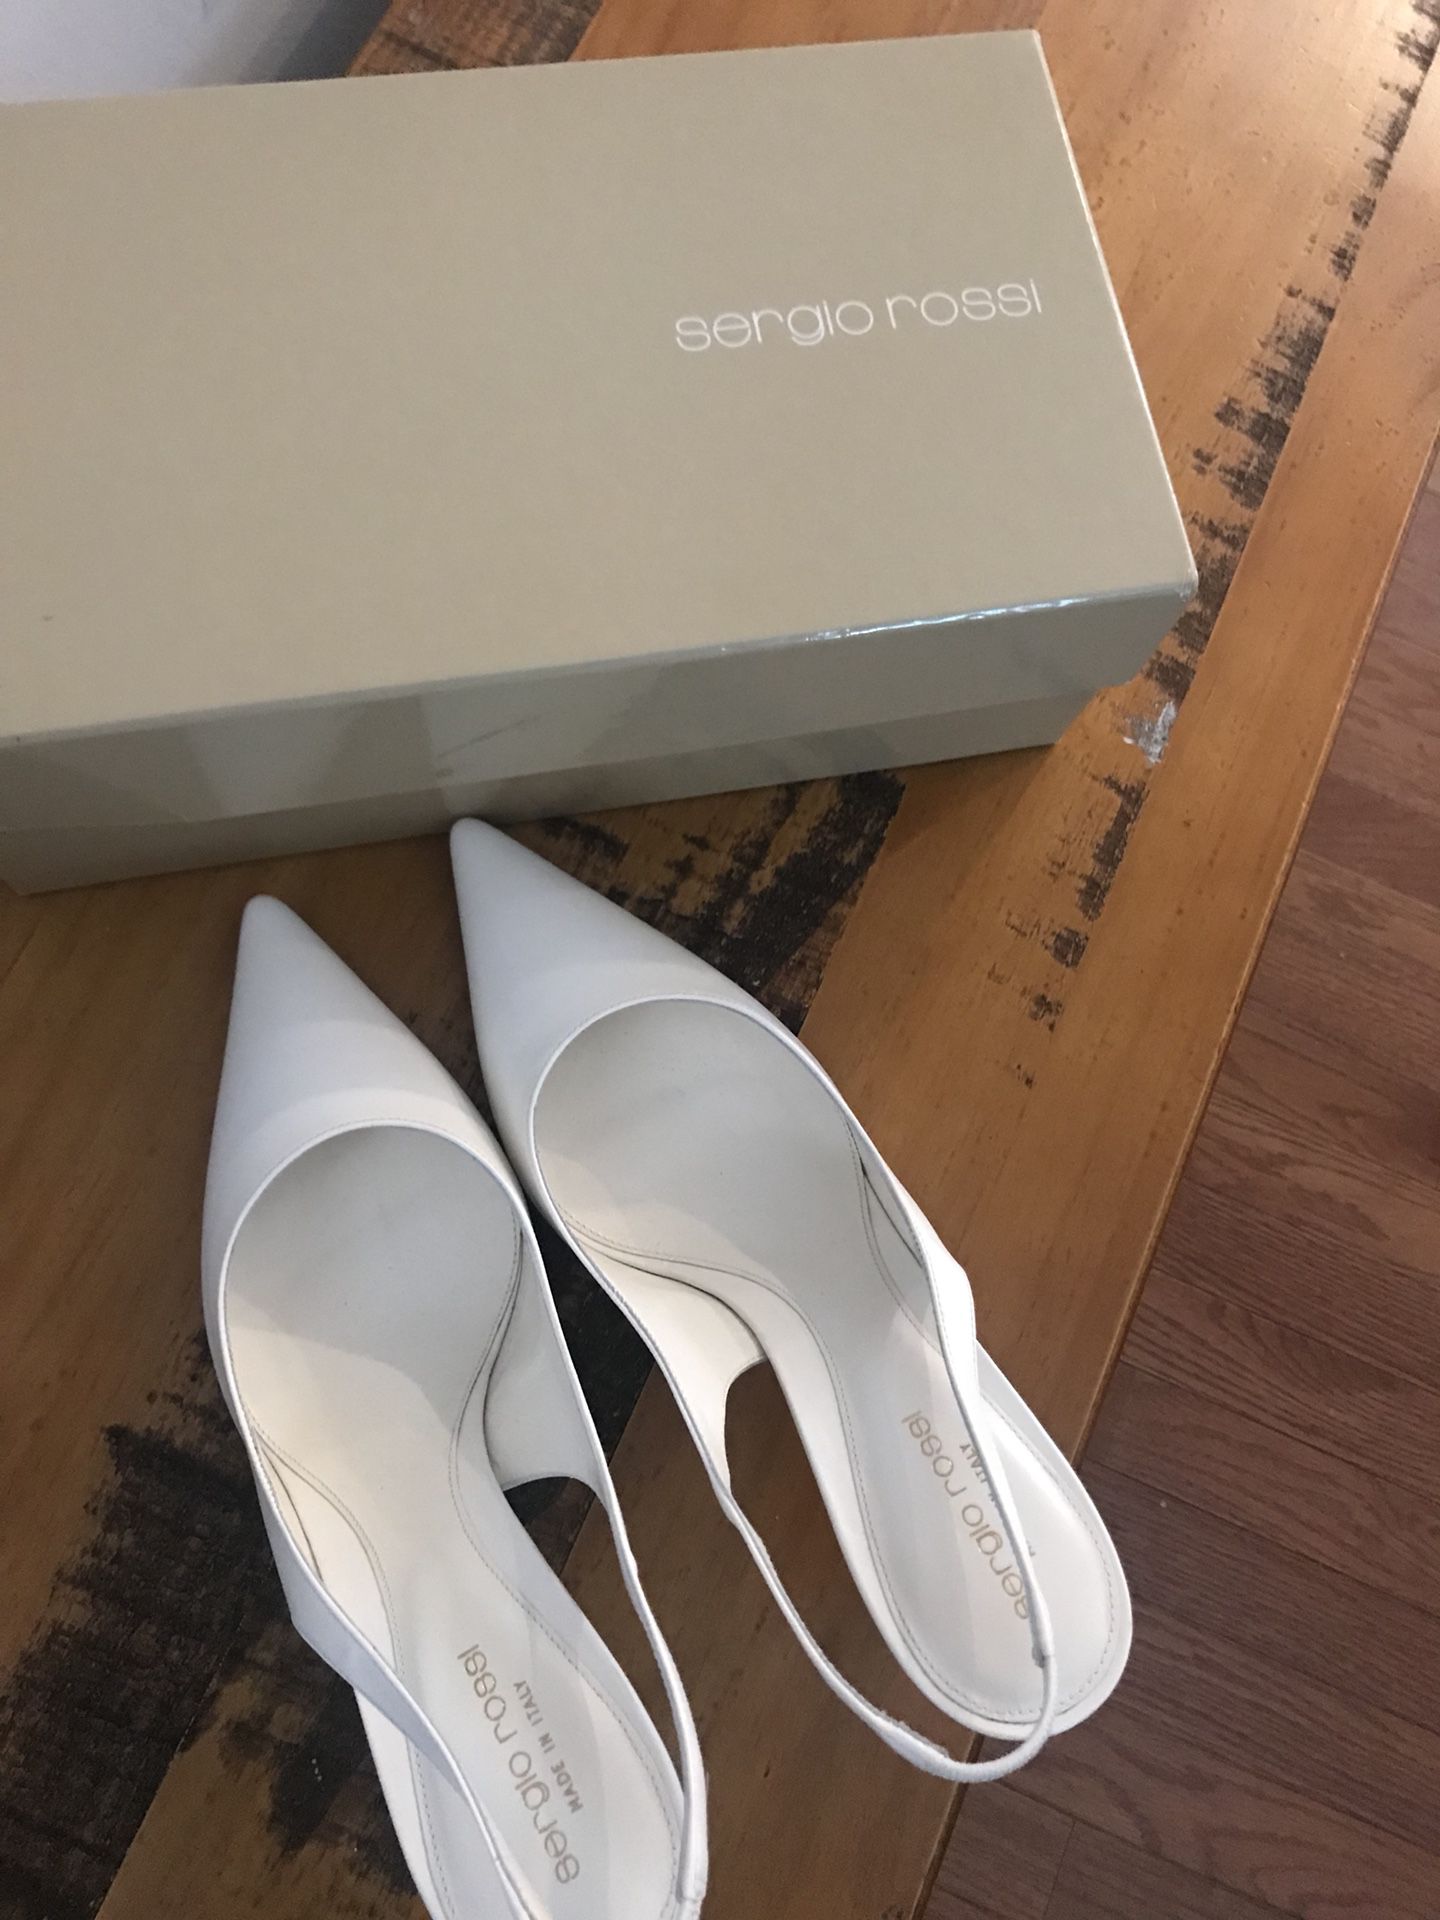 Sergio Rossi- brand new slingback heels